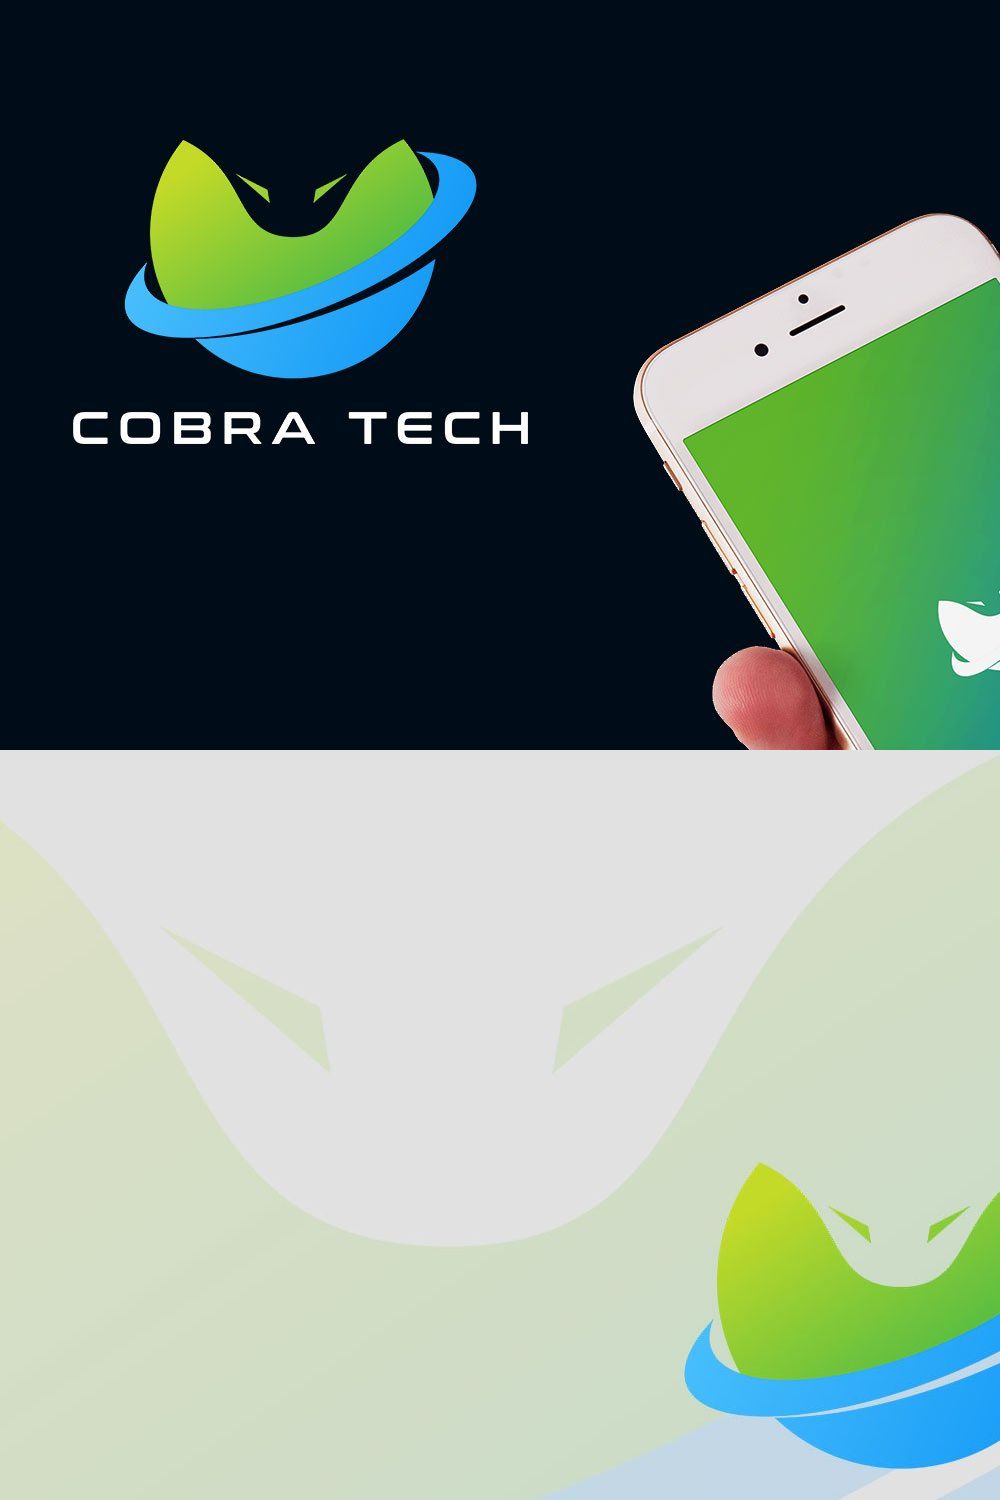 Cobra Tech Logos pinterest preview image.